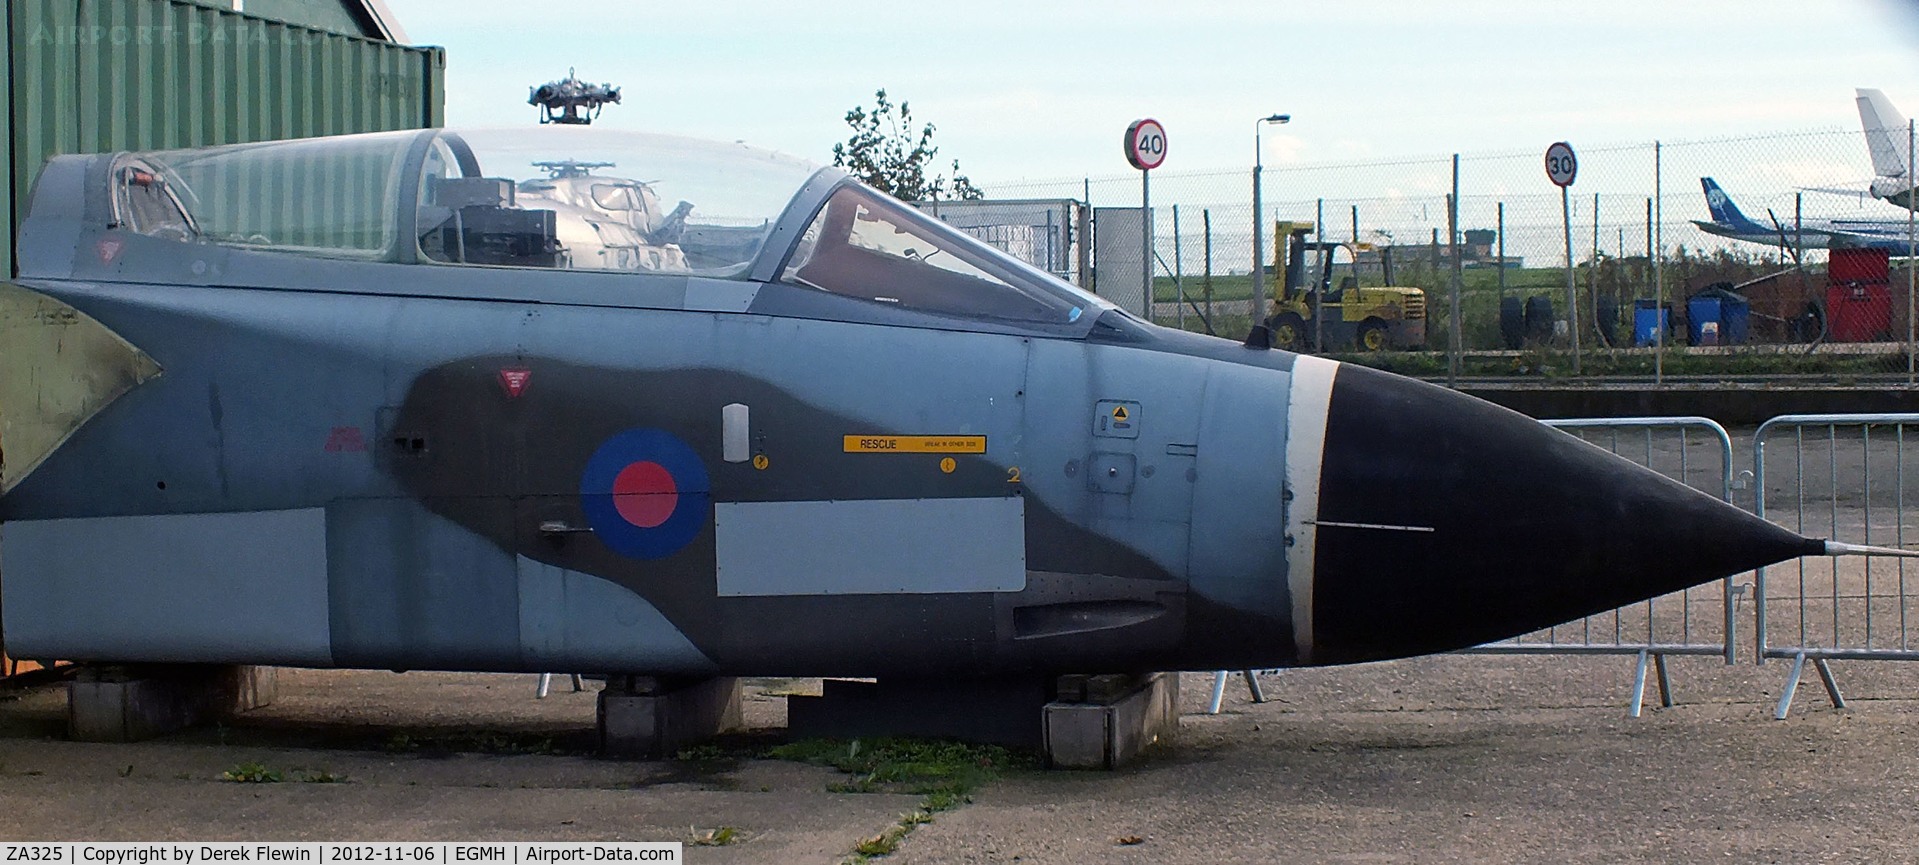 ZA325, 1979 Panavia Tornado GR.1(T) C/N 014/BT005/3007, Seen at RAF Manston History Museum